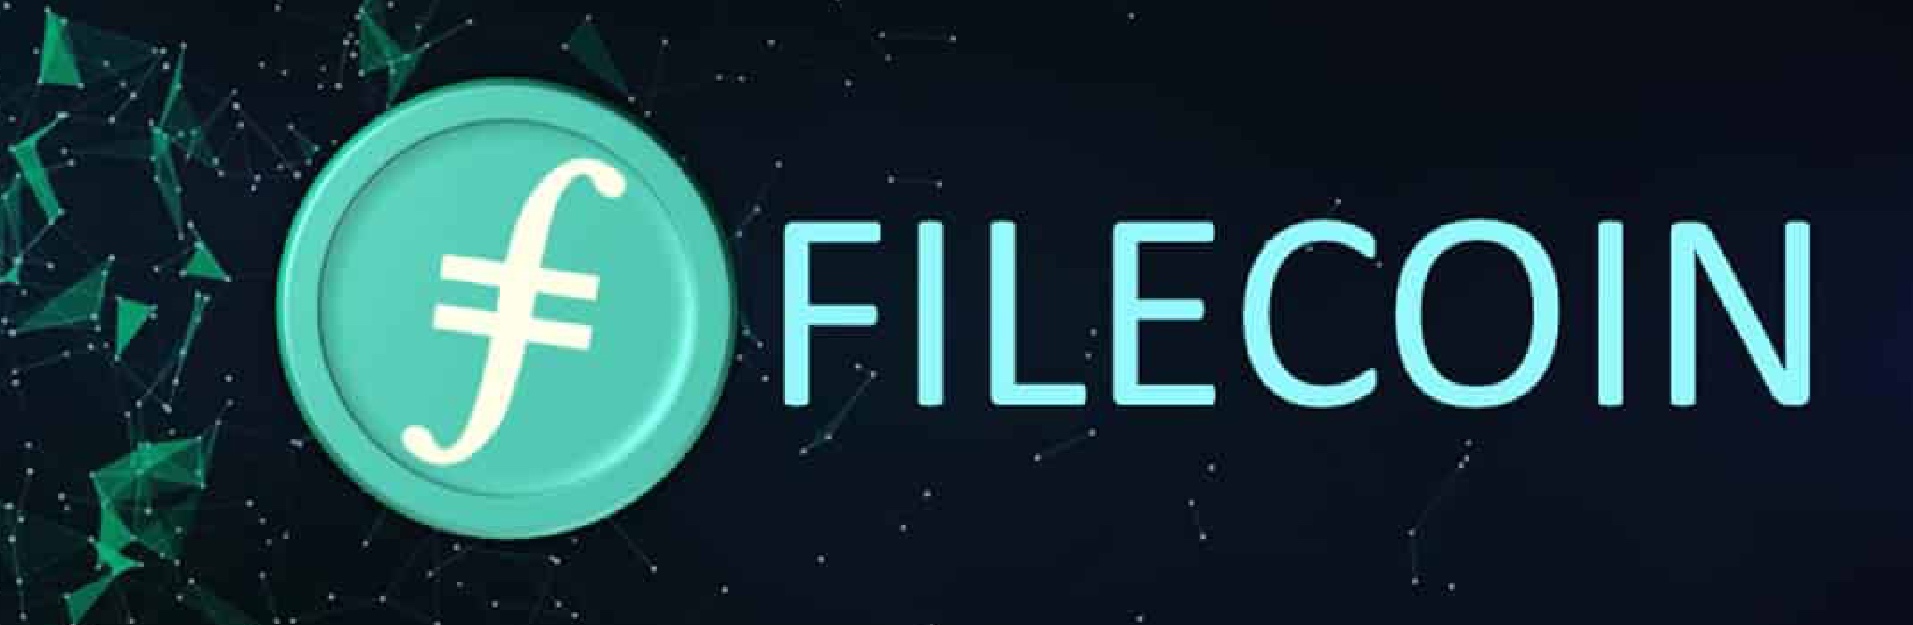 Güvenli Filecoin (FIL) Cüzdanı